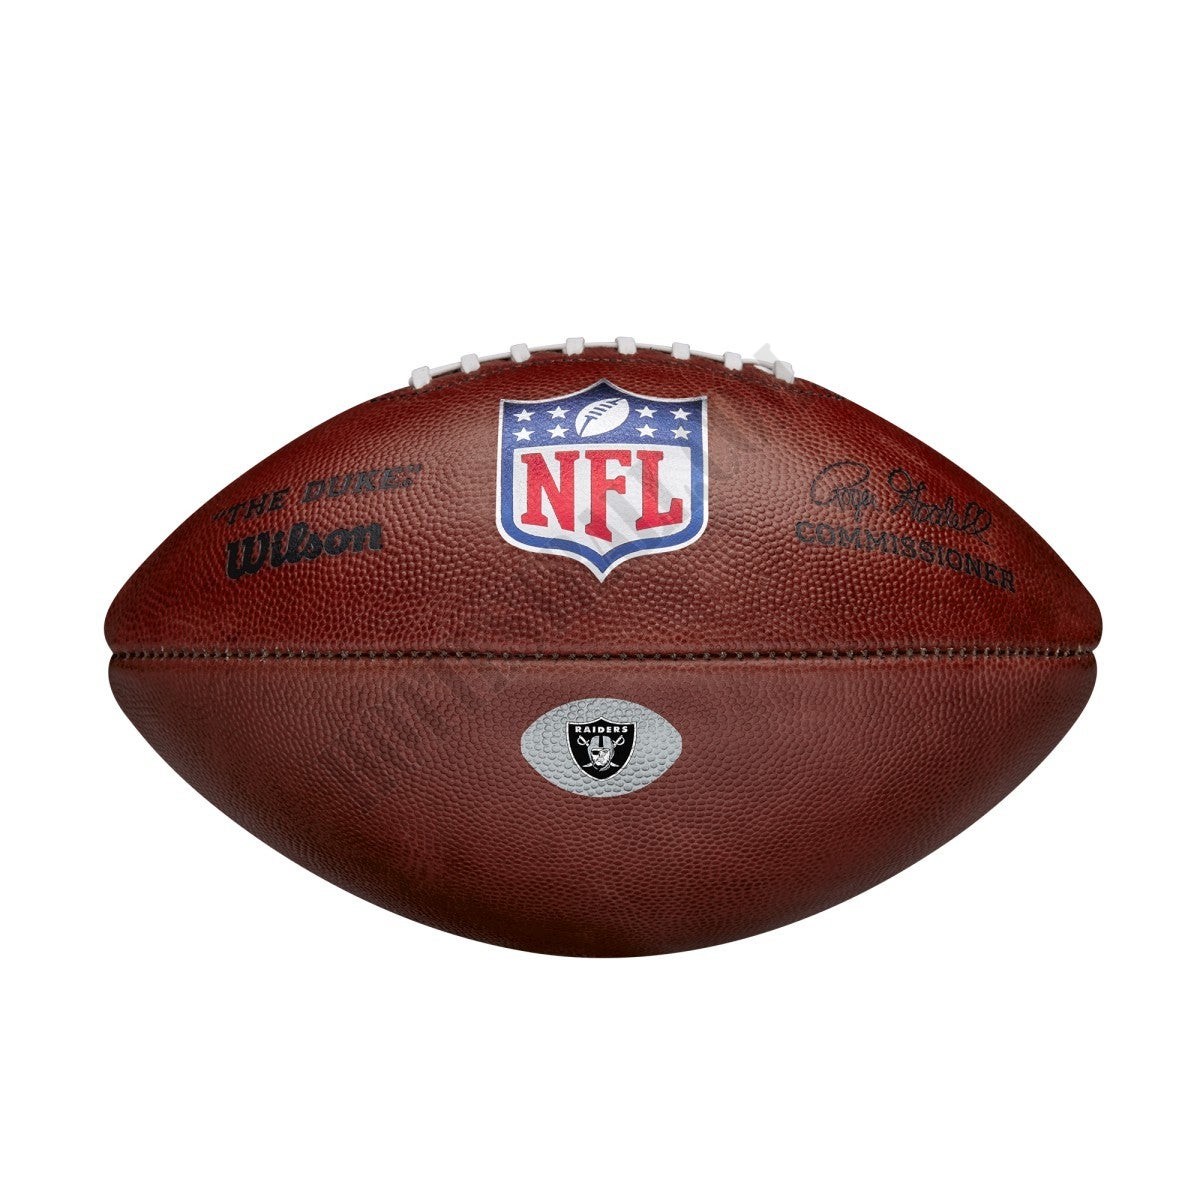 The Duke Decal NFL Football - Las Vegas Raiders - Wilson Discount Store - The Duke Decal NFL Football - Las Vegas Raiders - Wilson Discount Store